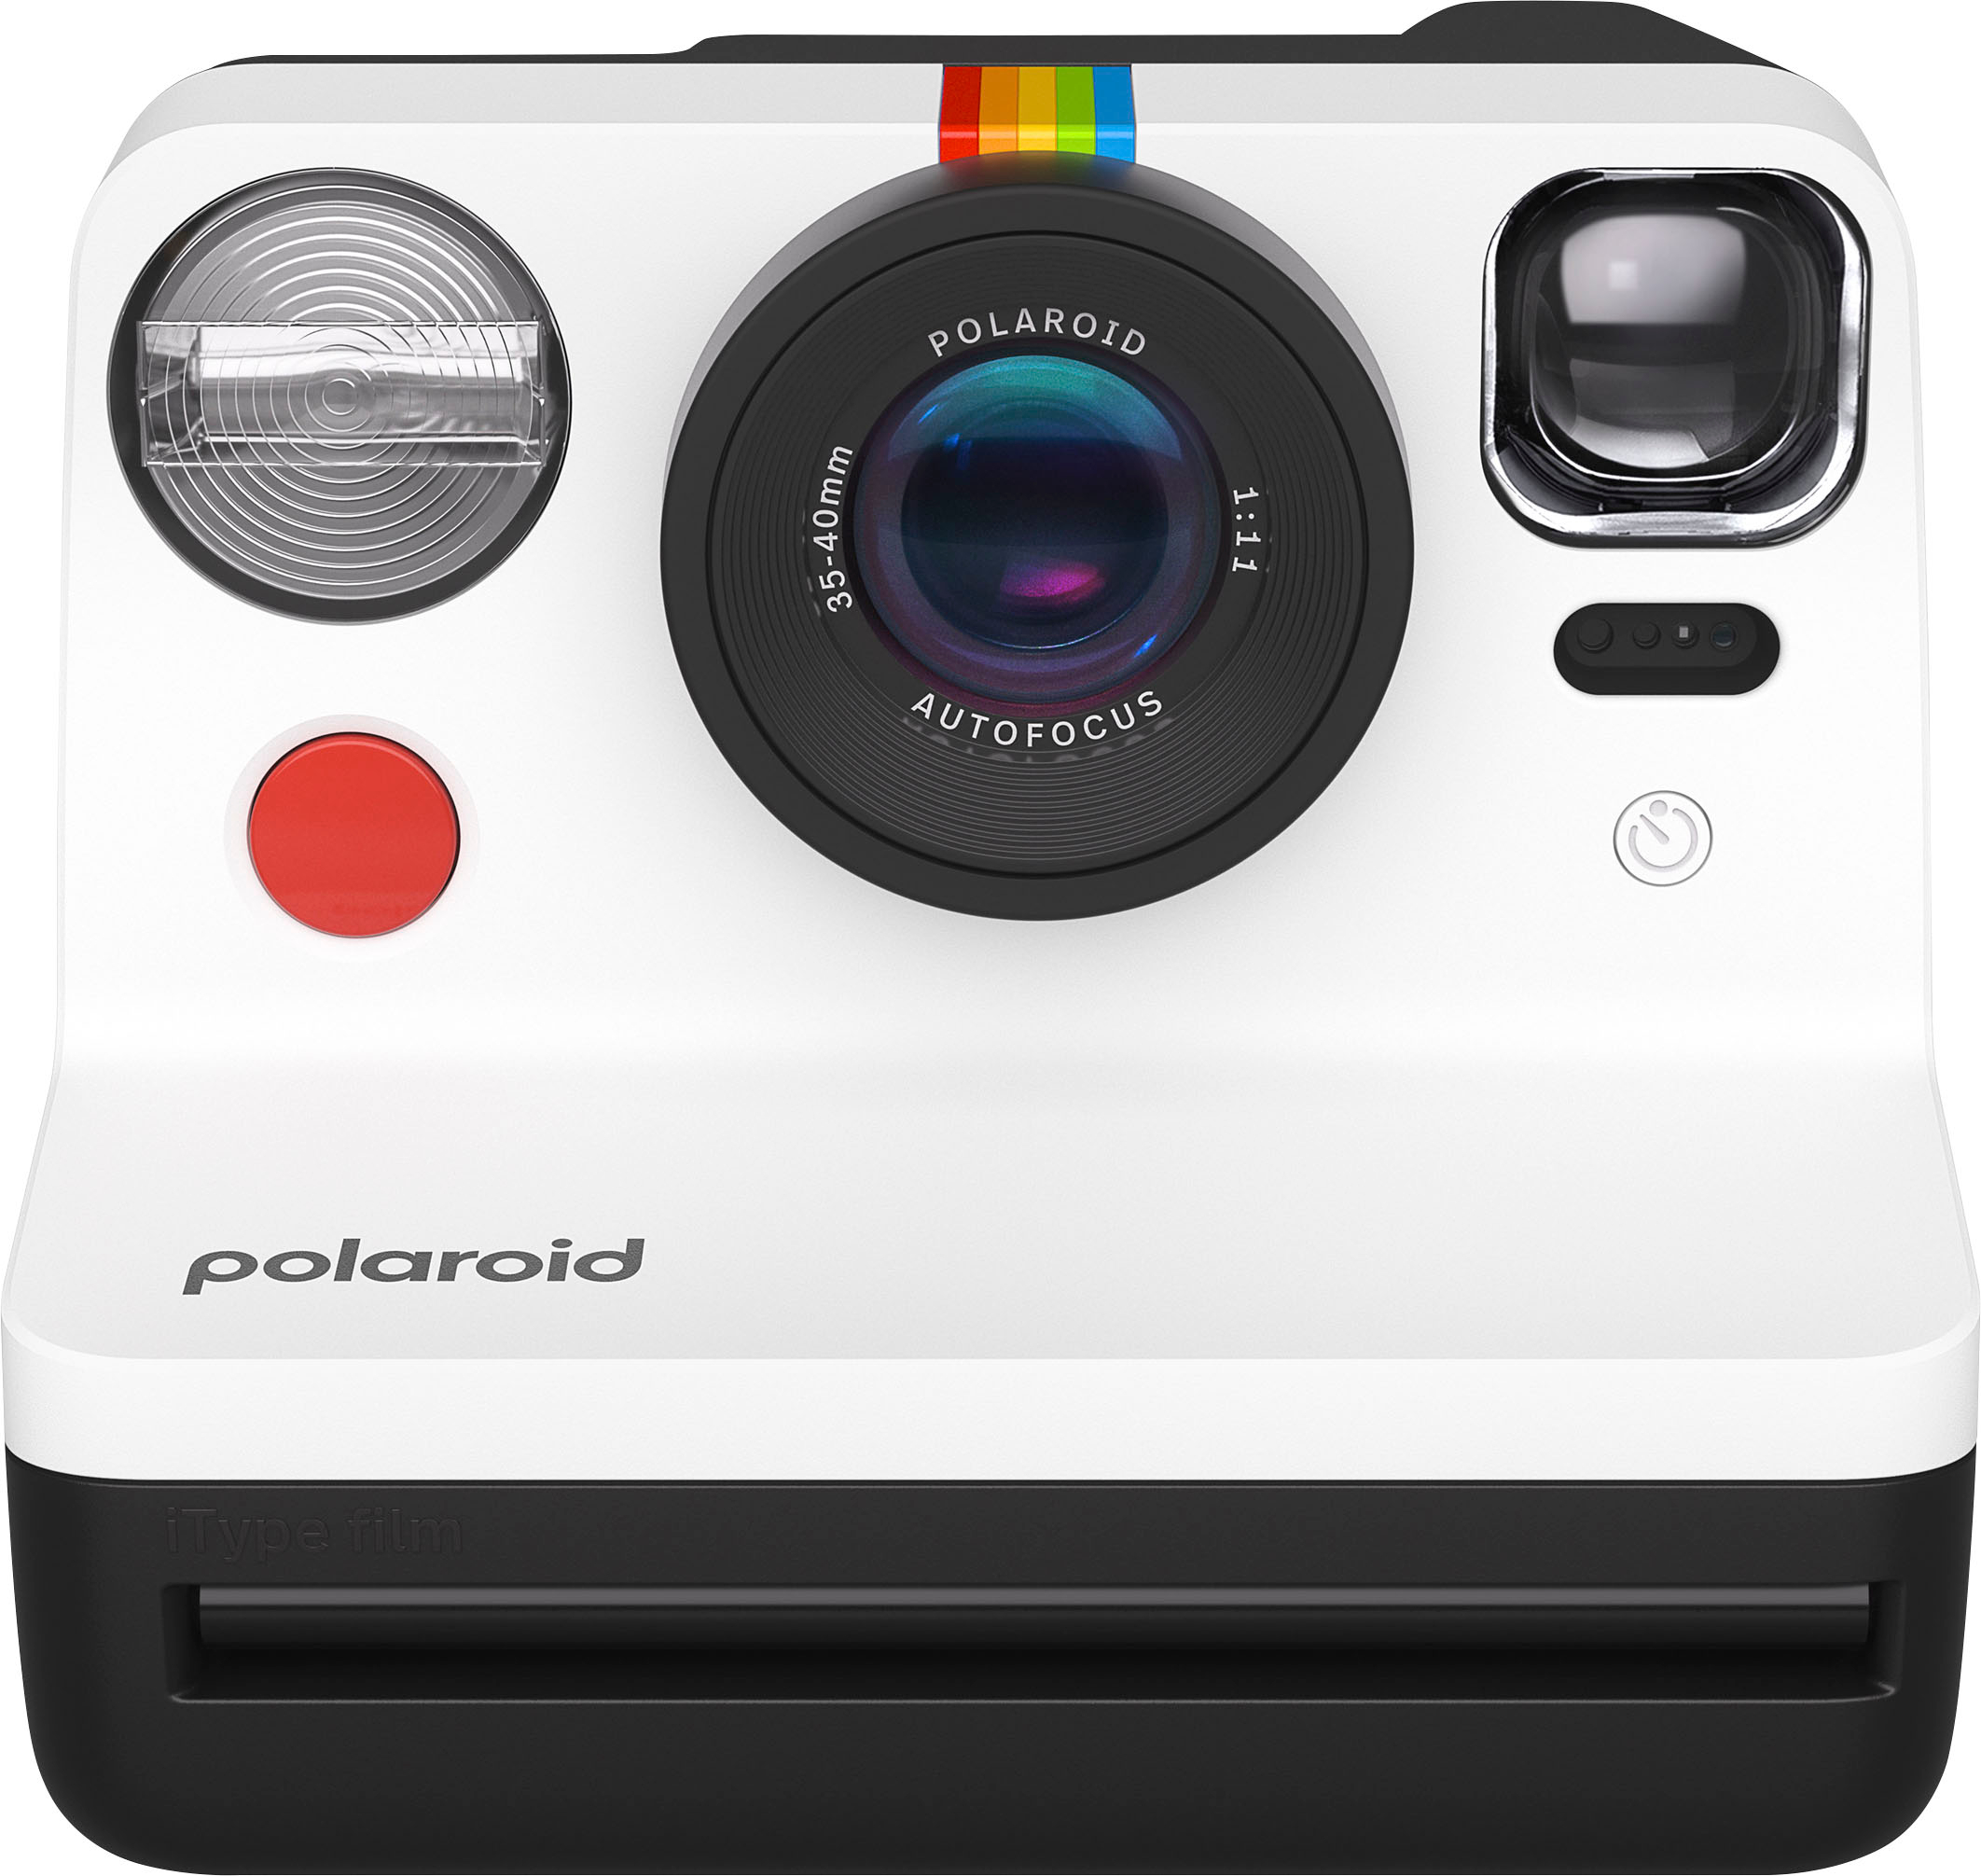 Polaroid Originals Black & White Film for SX70 Instant Camera - 2 Pack (16  Photos)